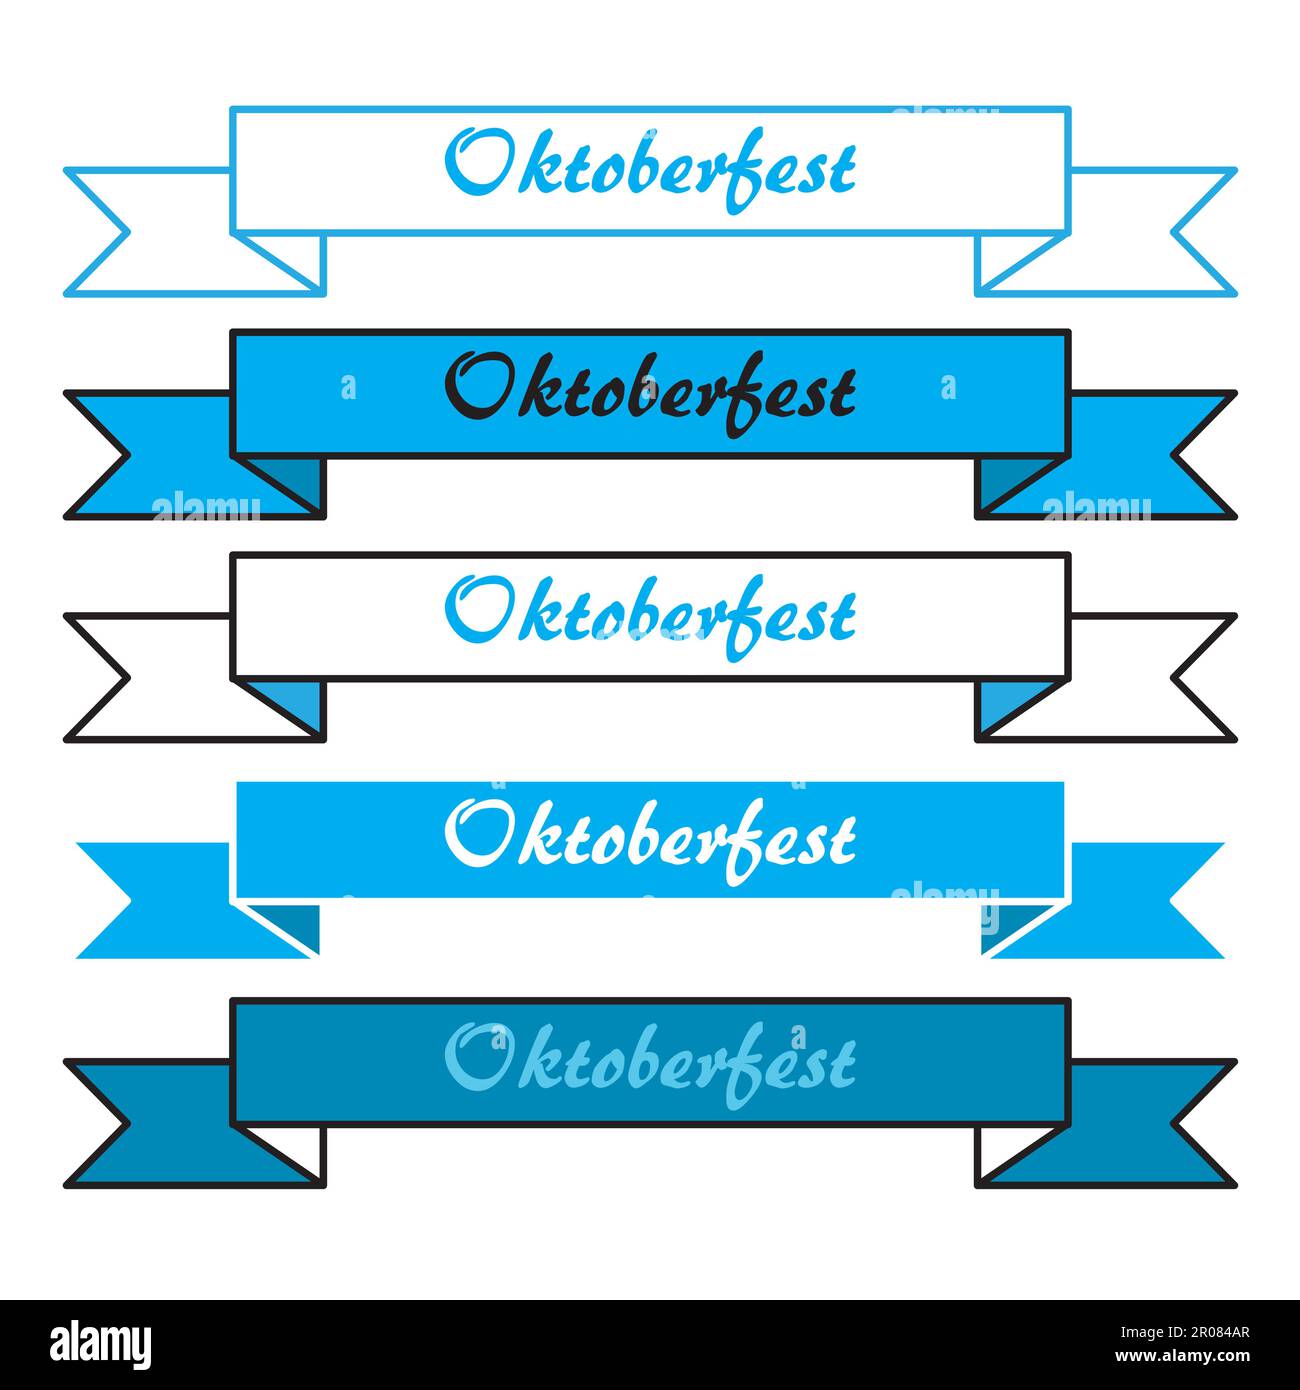 Oktoberfest simple banners in bavarian colors. Vector Stock Vector